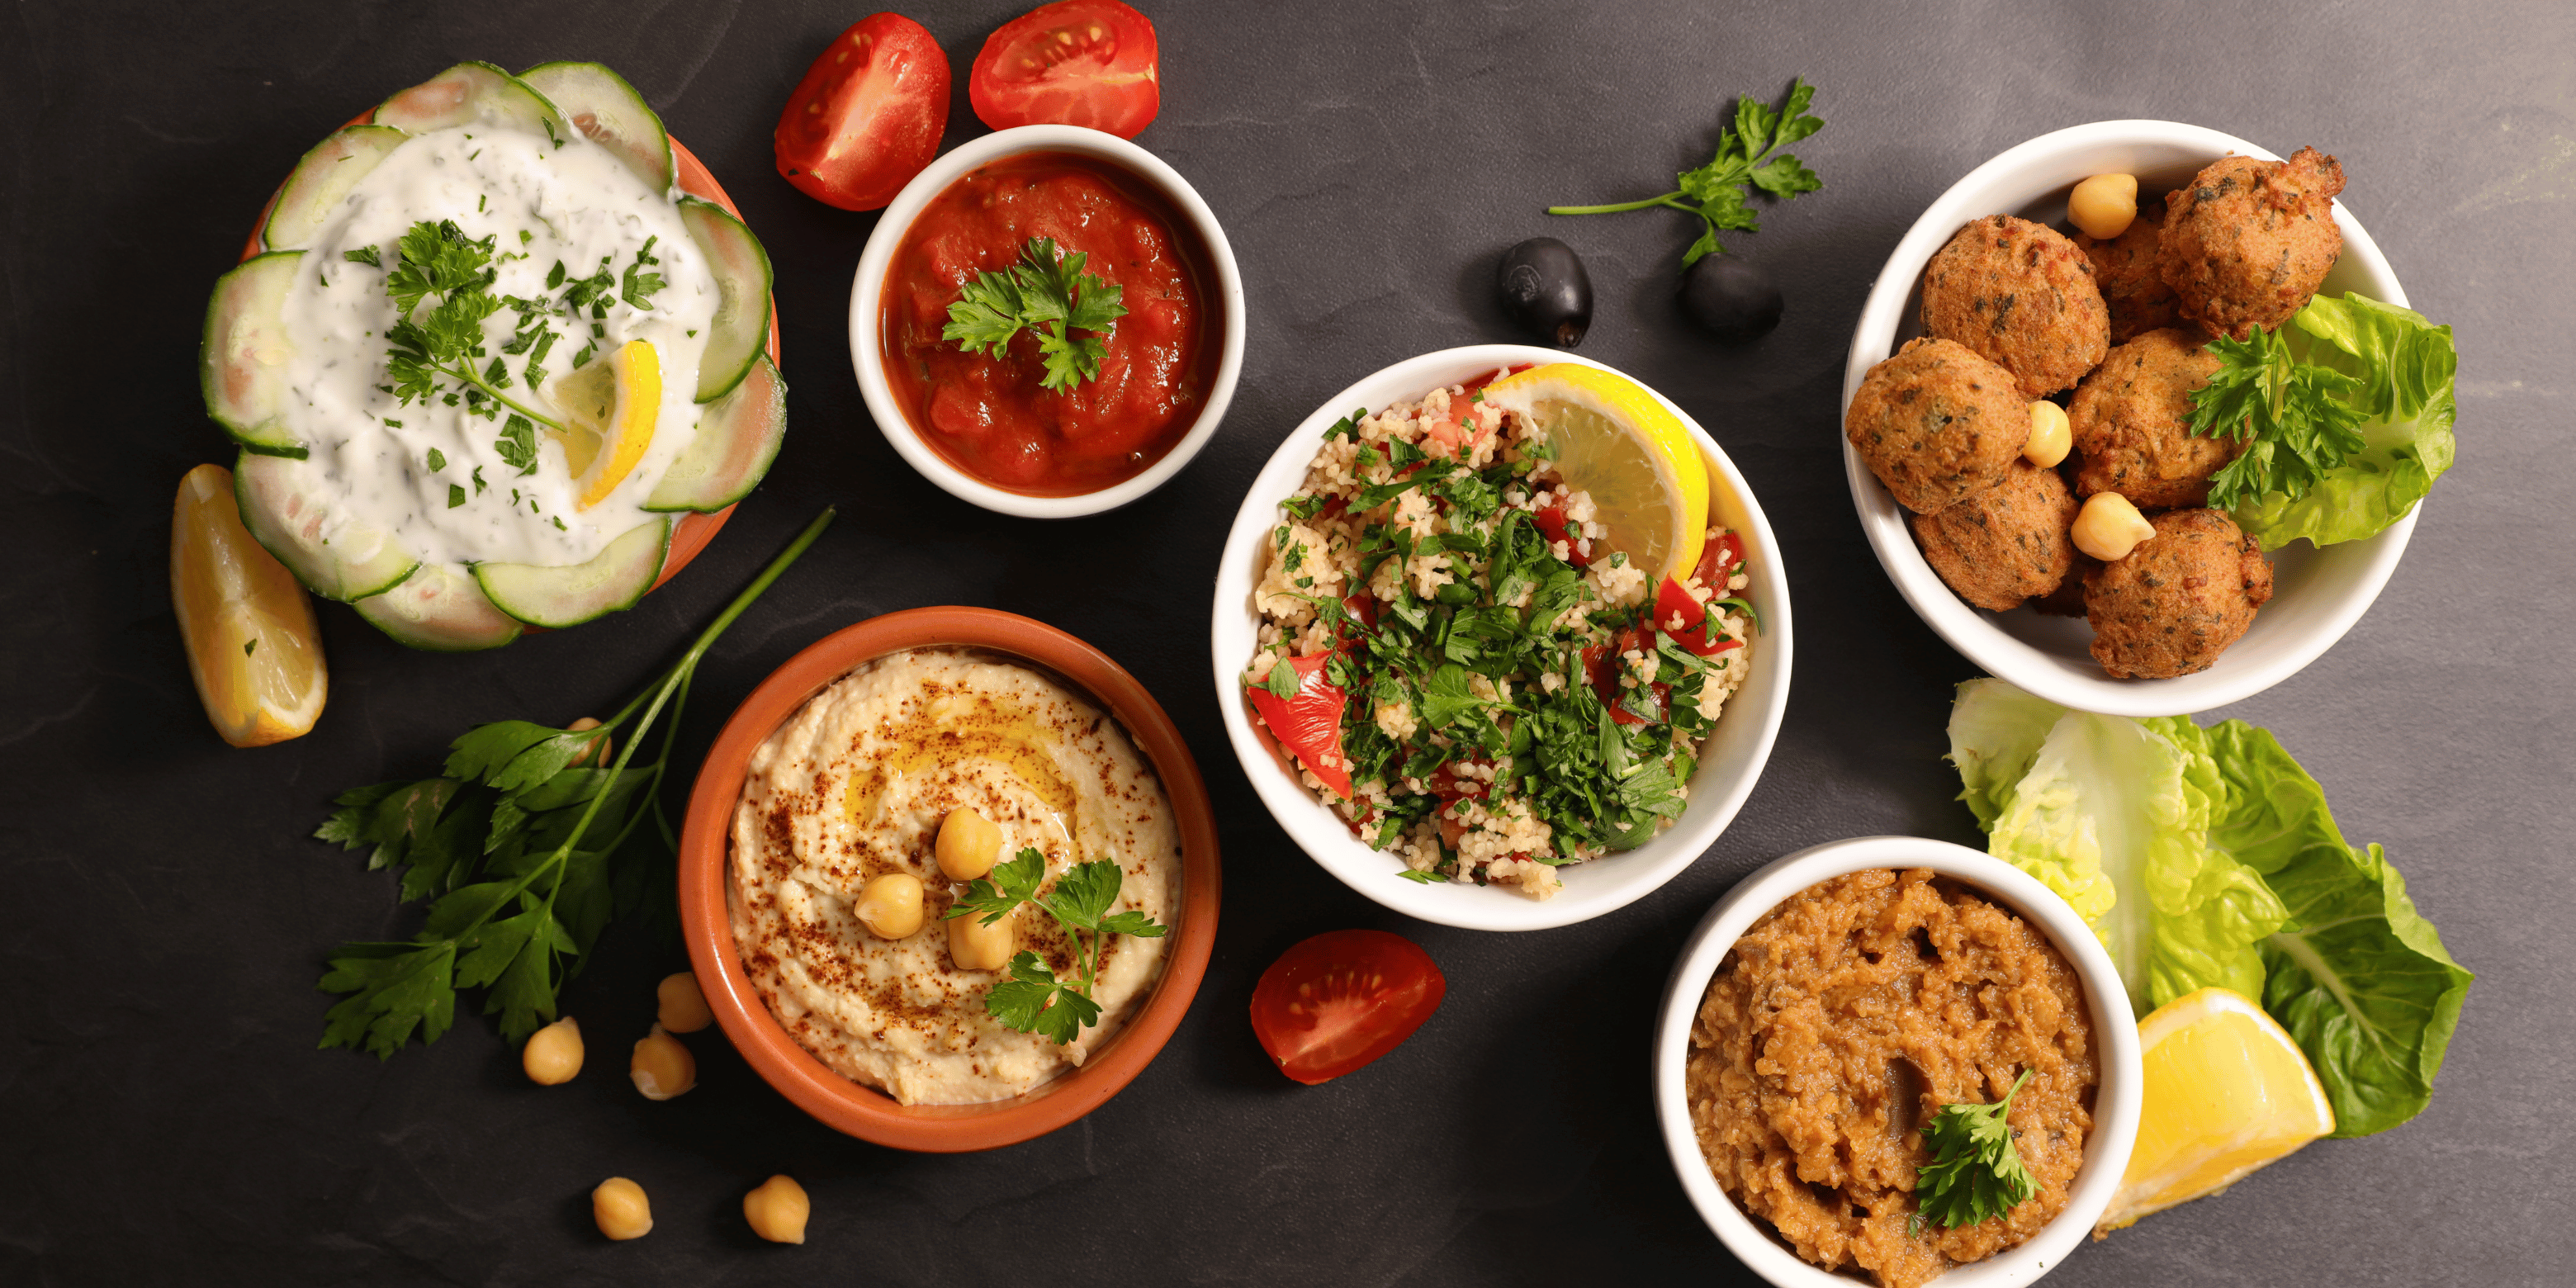 Les meilleurs restaurants libanais de Nice